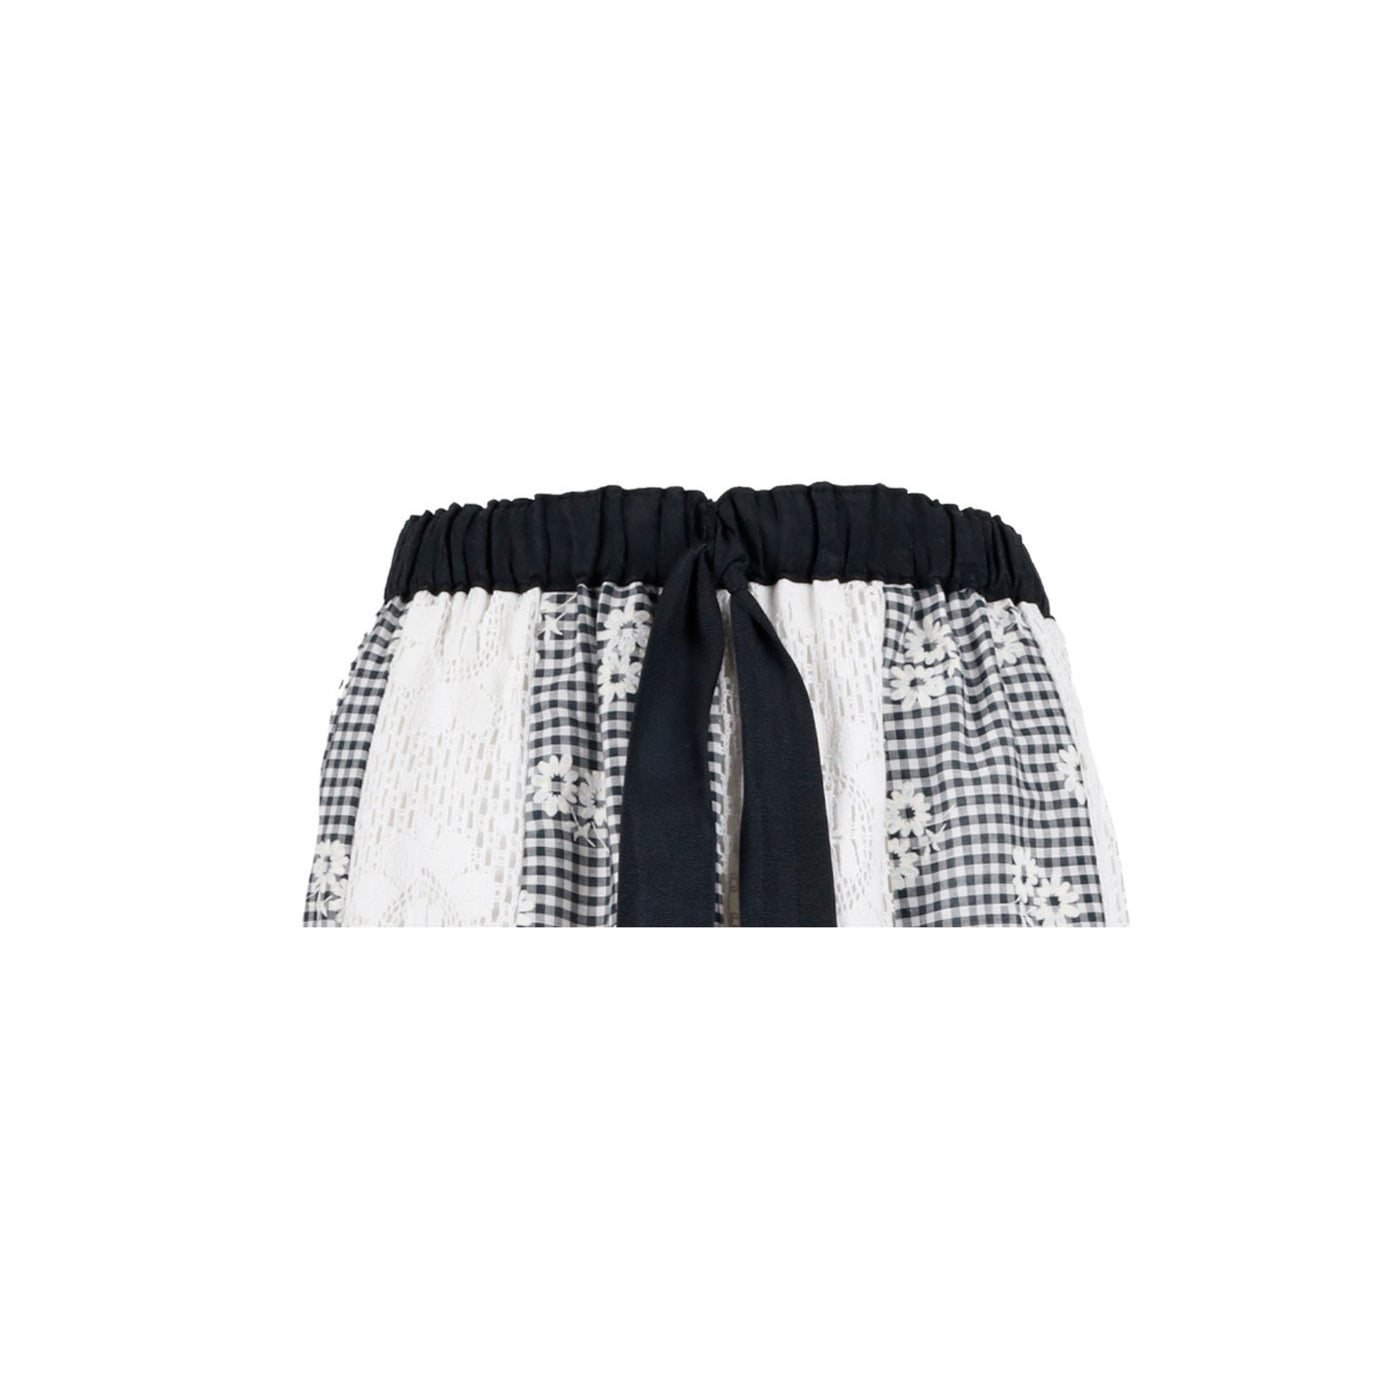 Secondhand Collection Privée Vintage Cotton Long Skirt